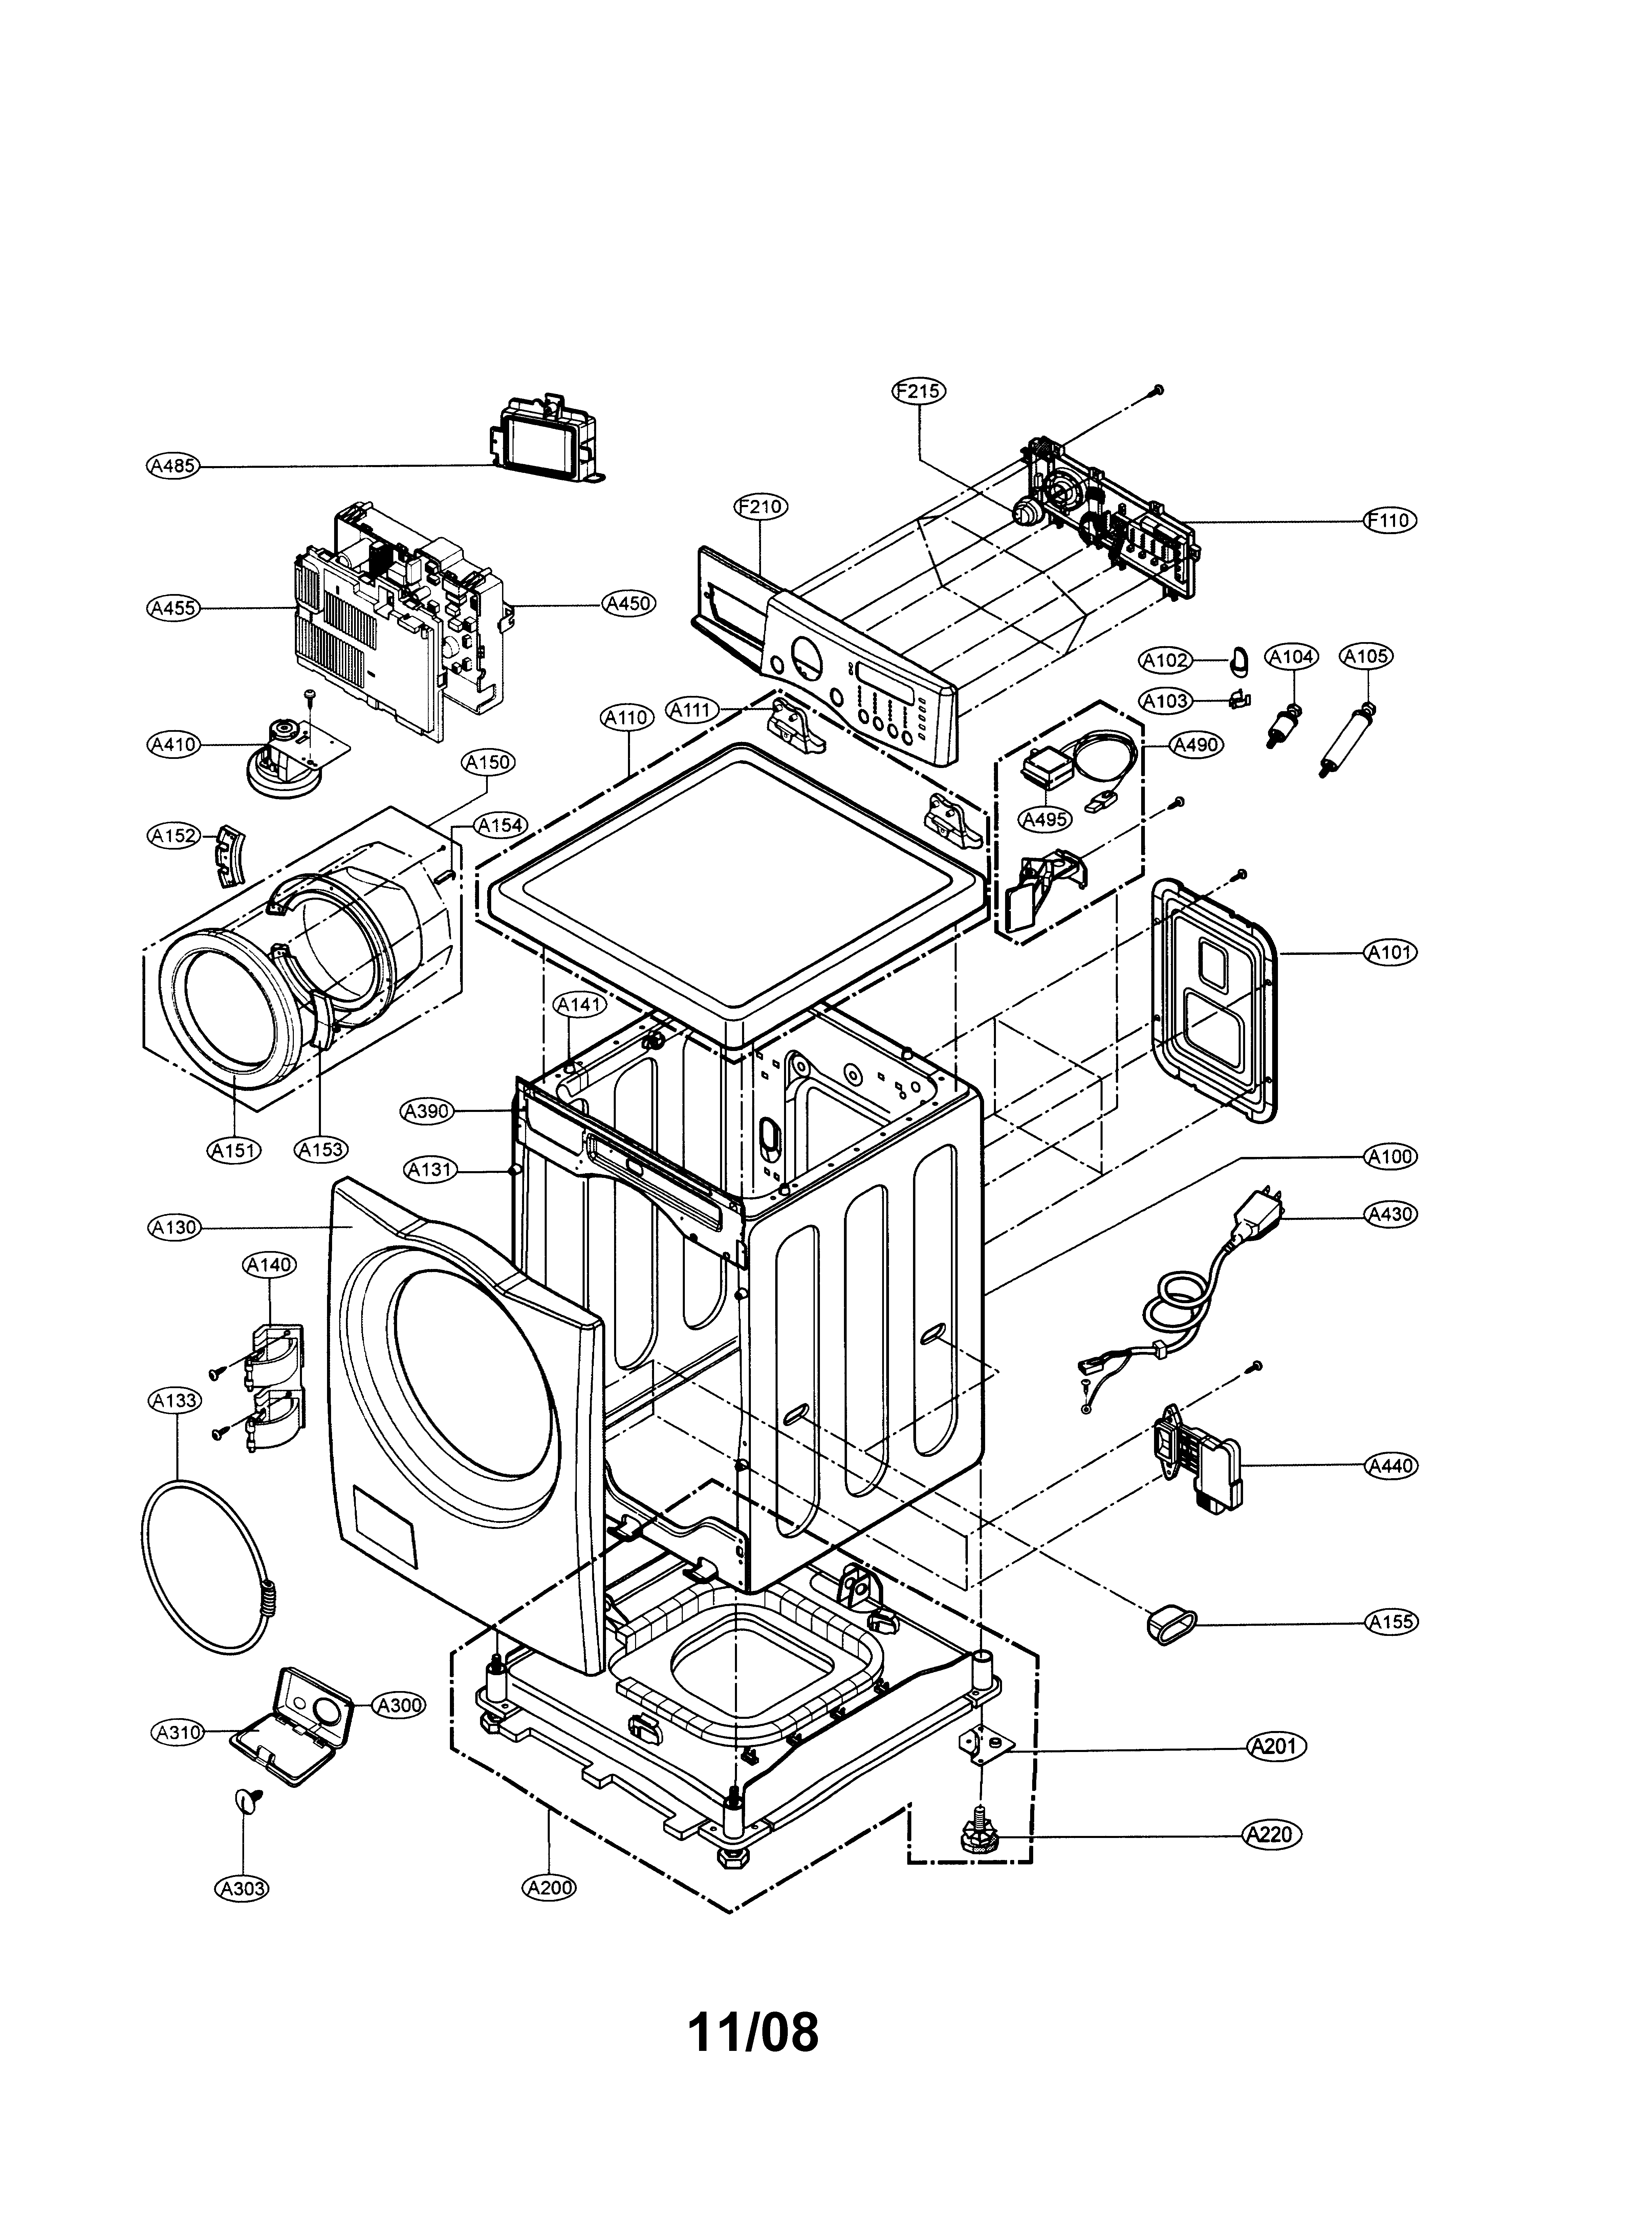 LG WASHER Parts | Model wm2677hsm | Sears PartsDirect